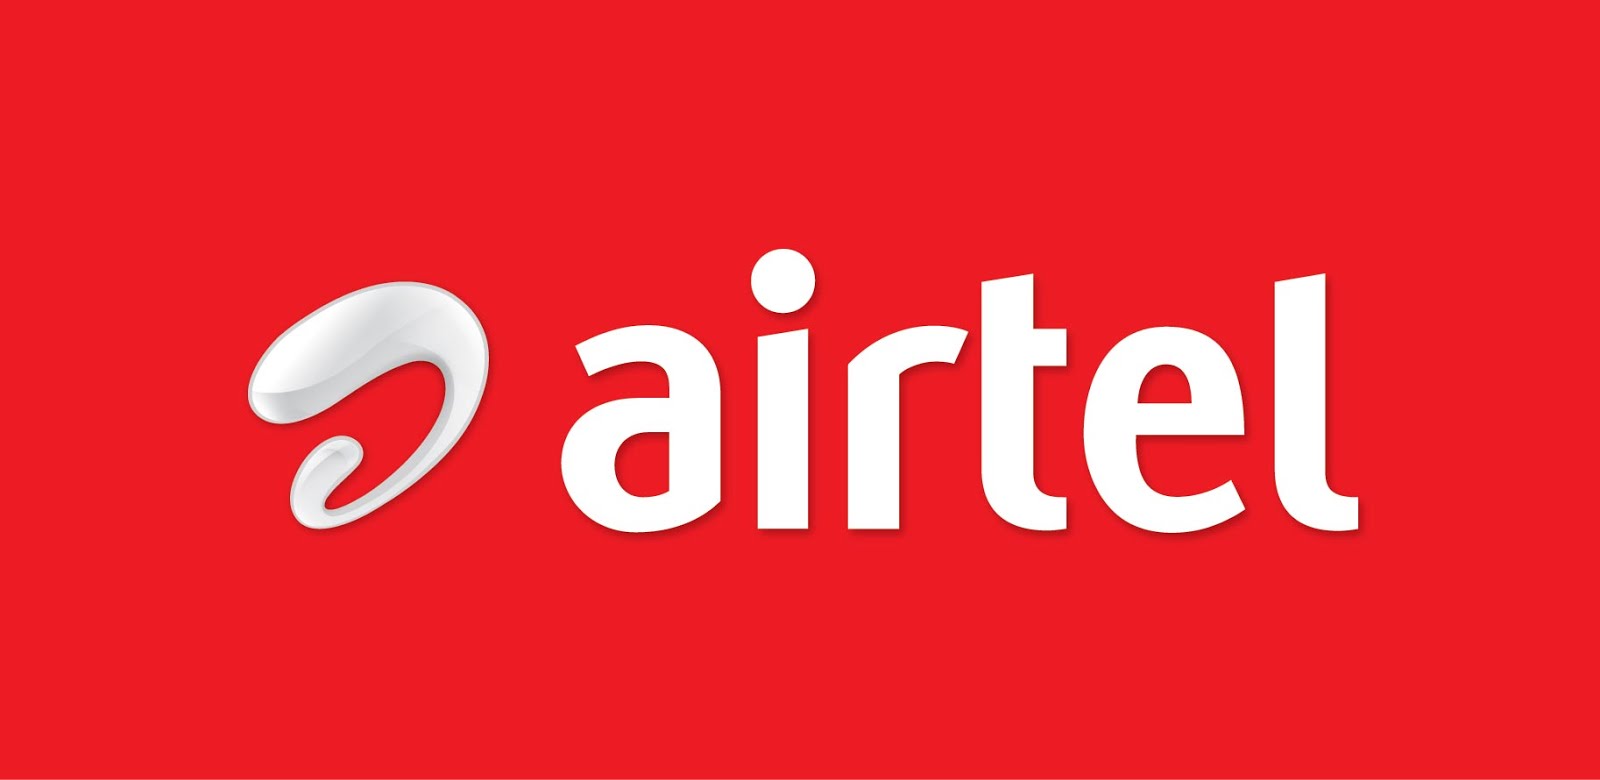 Airtel Tariff Plans